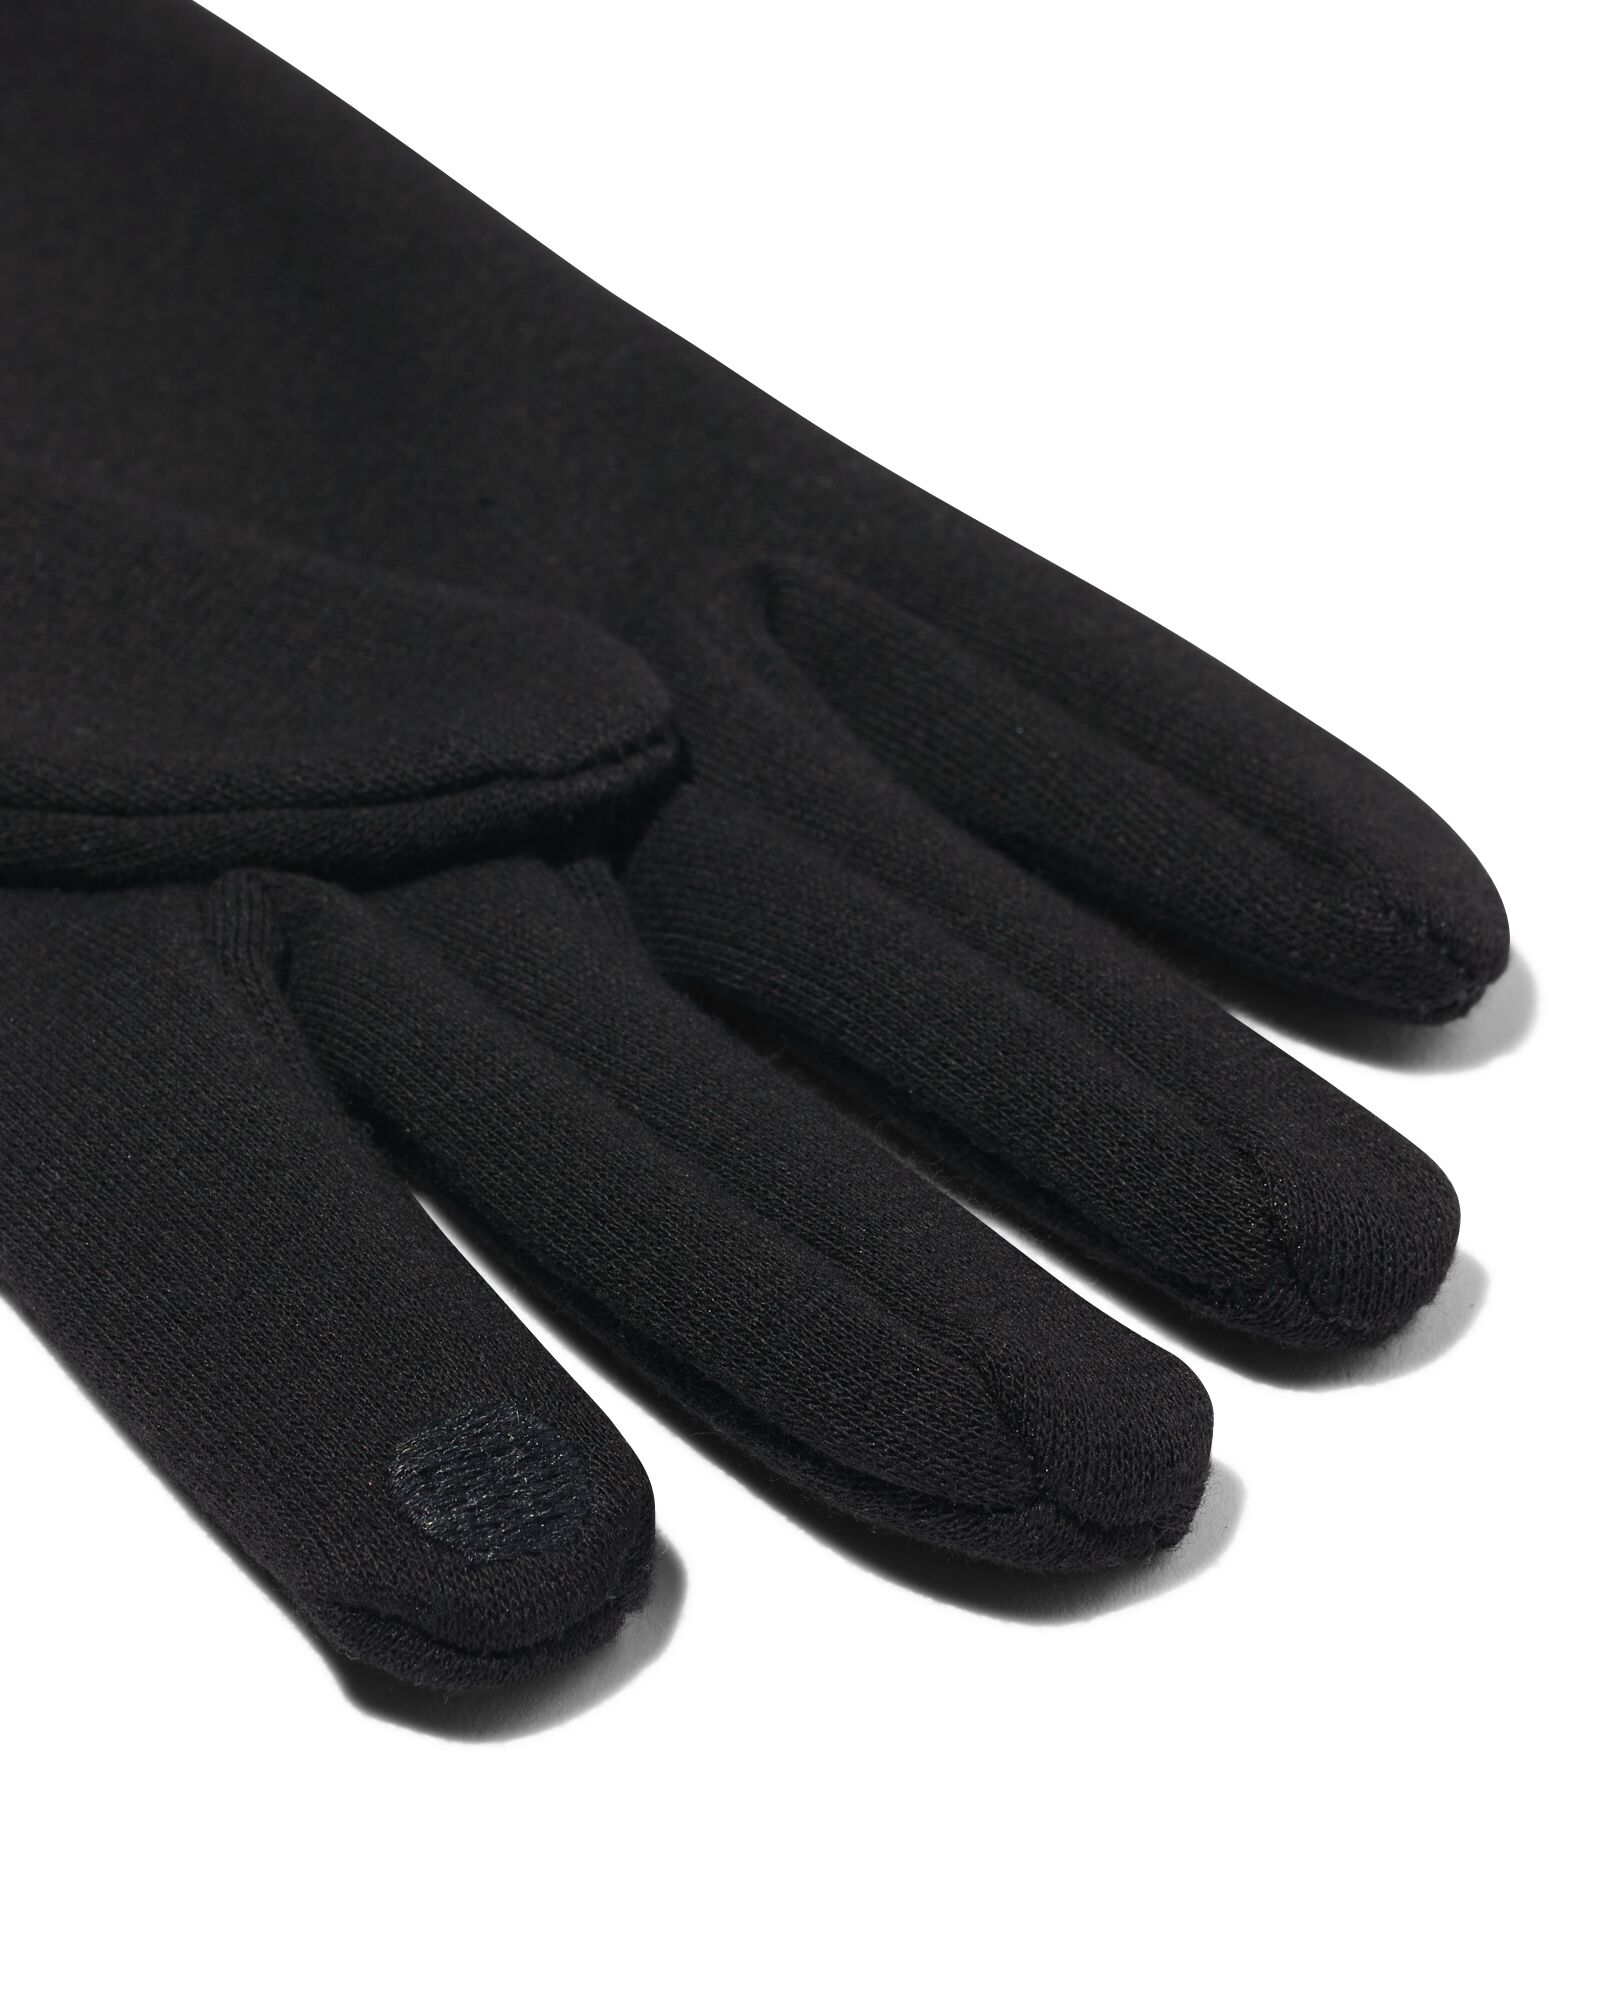 handschoenen touchscreen zwart S/M - 16460176 - HEMA